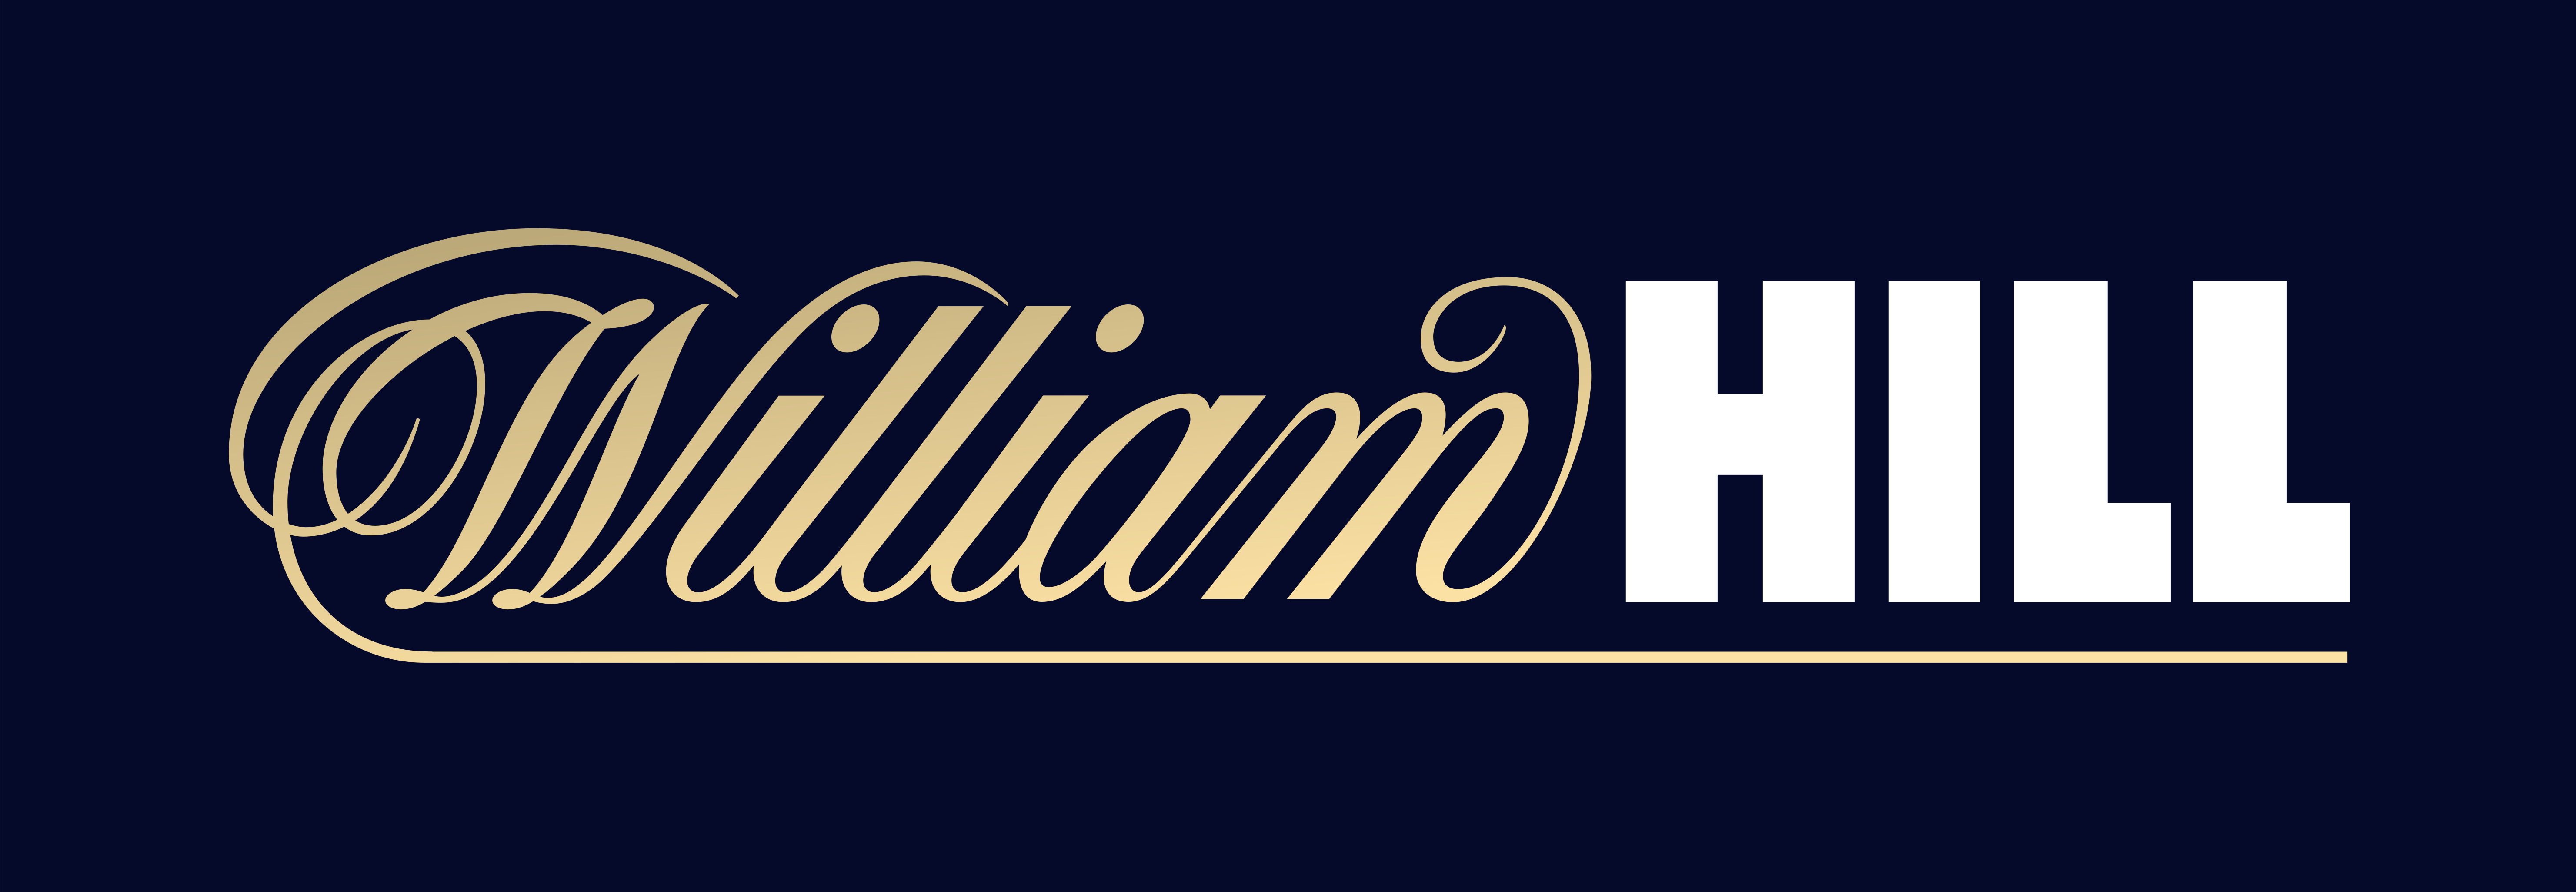 William hill — роби ставки та отримай винагороду!